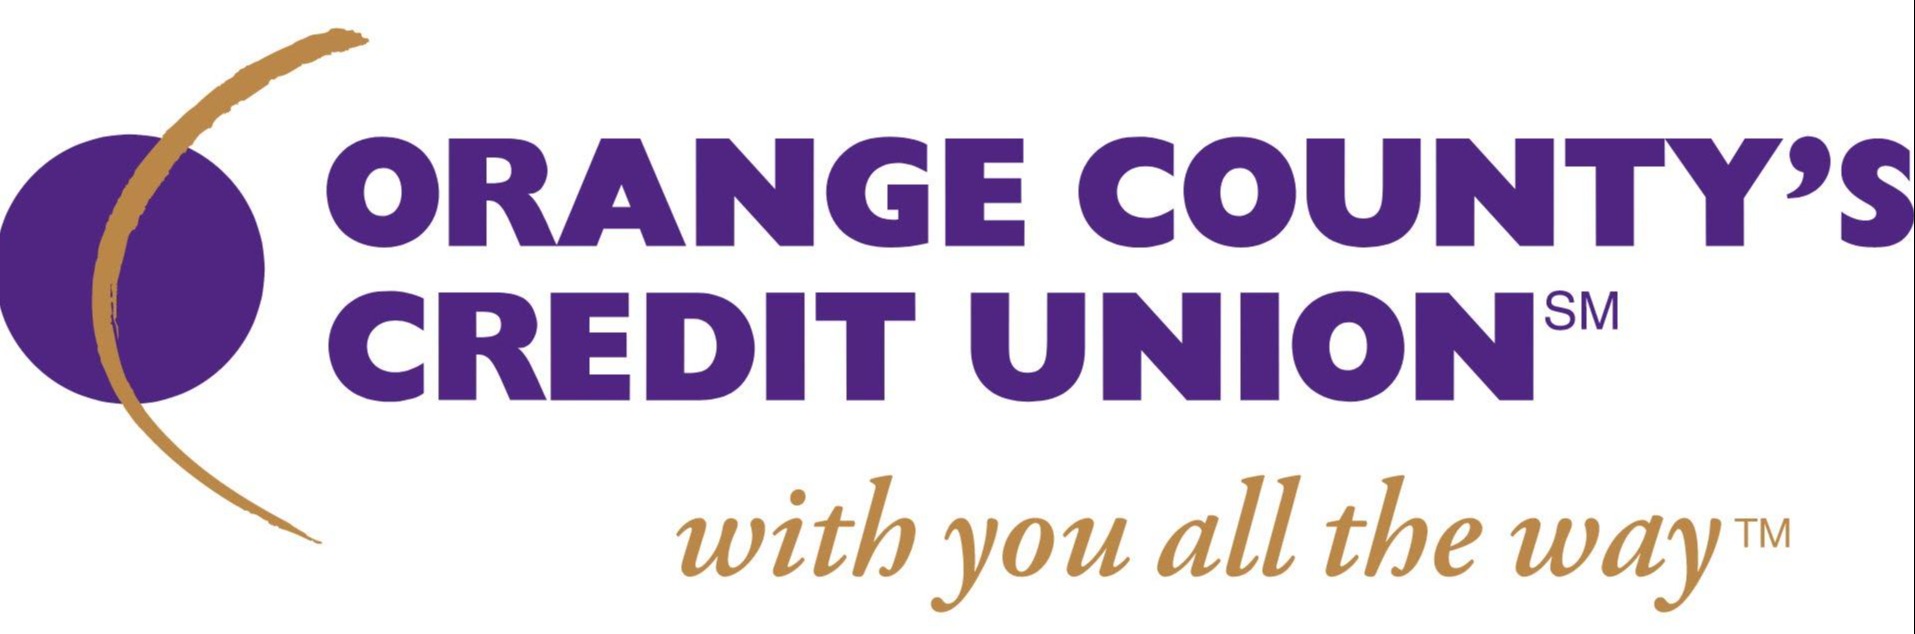 orange countys credit union